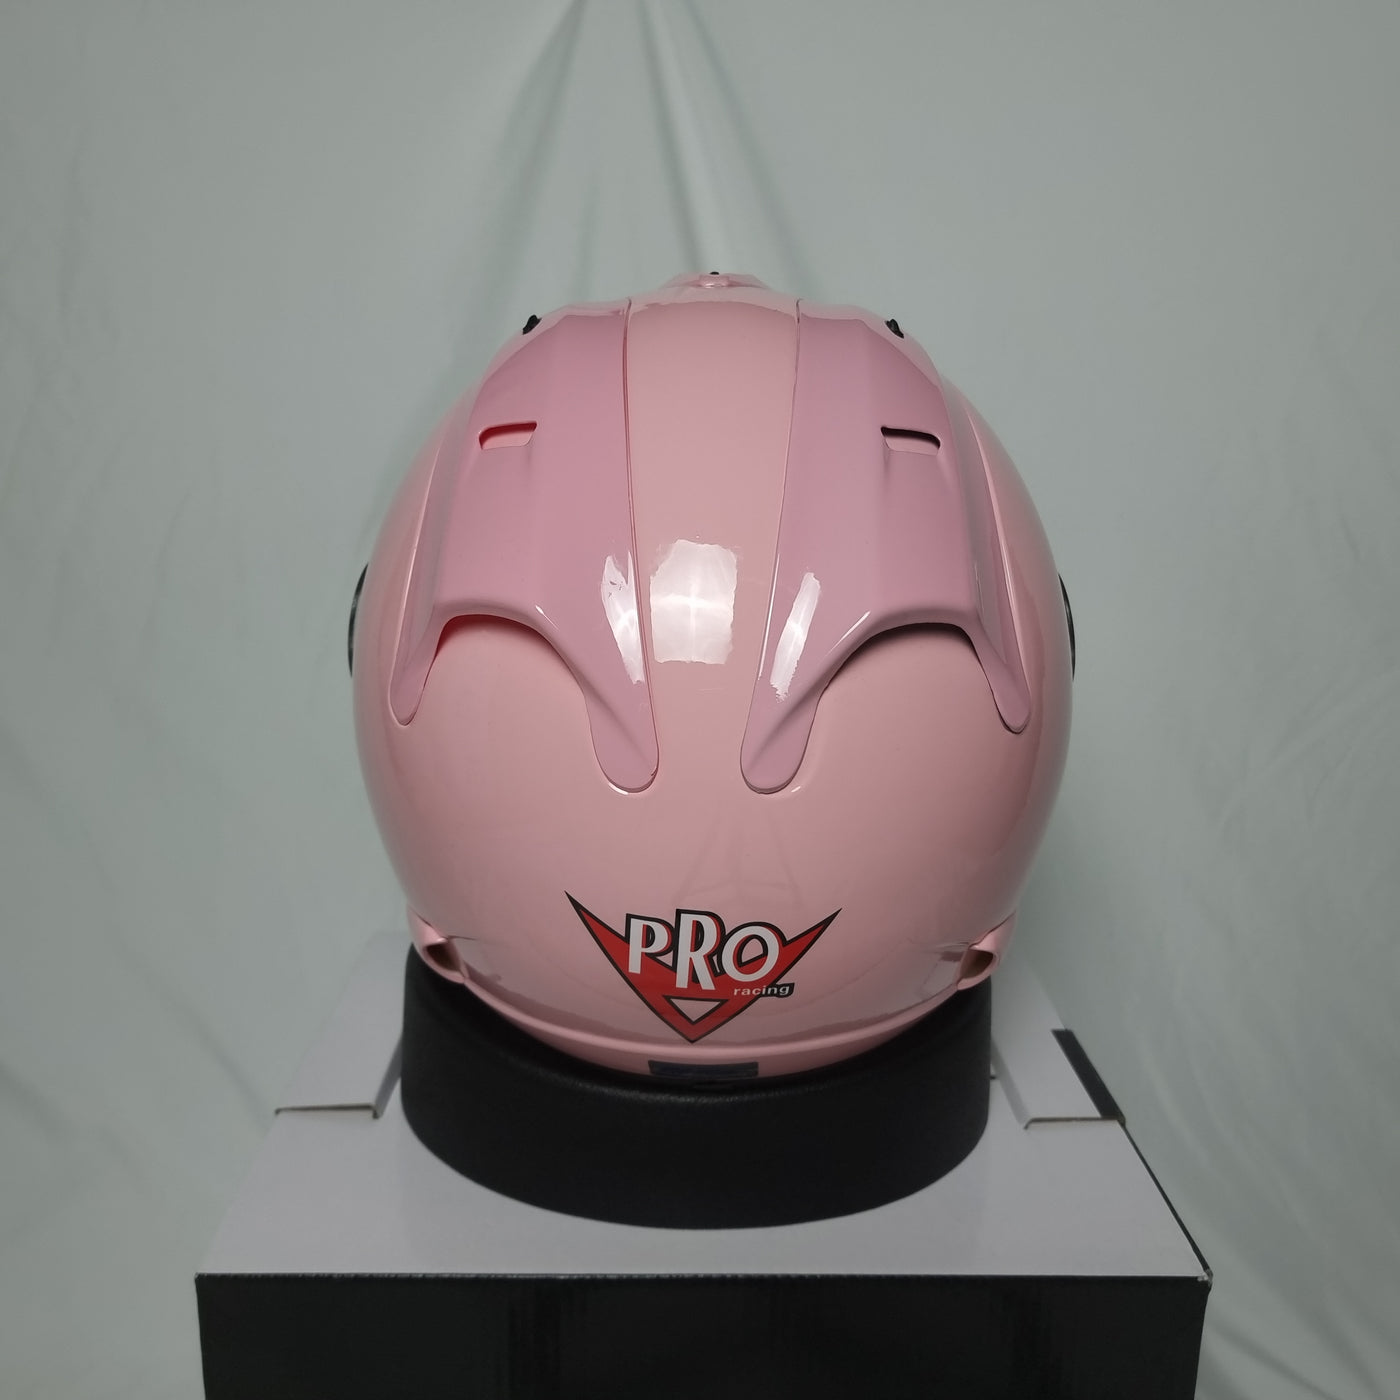 Pro 66 Gloss Pink Helmet